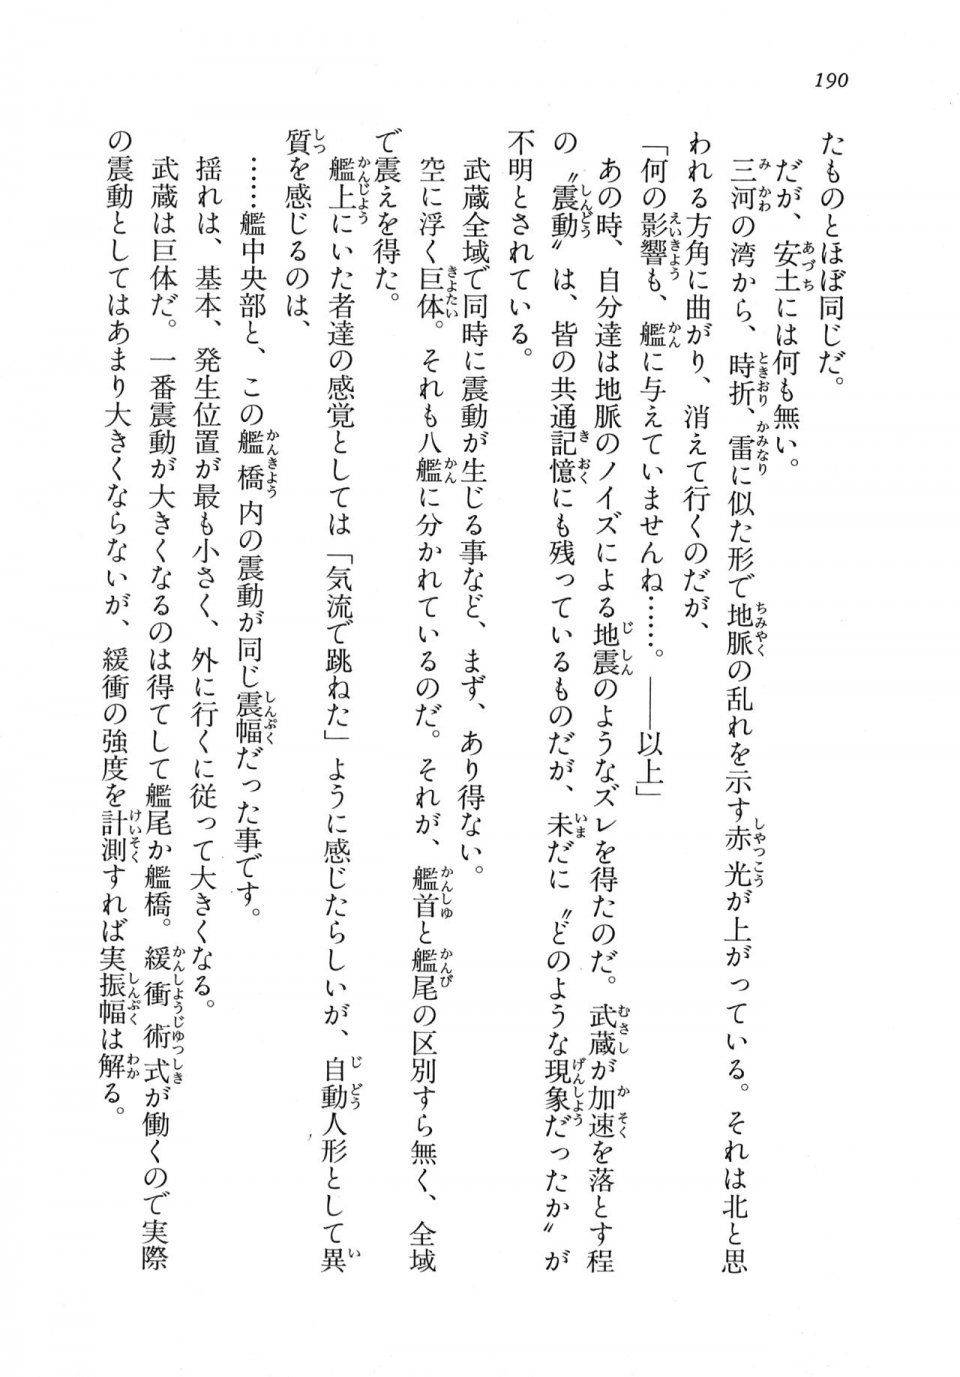 Kyoukai Senjou no Horizon LN Vol 18(7C) Part 1 - Photo #190